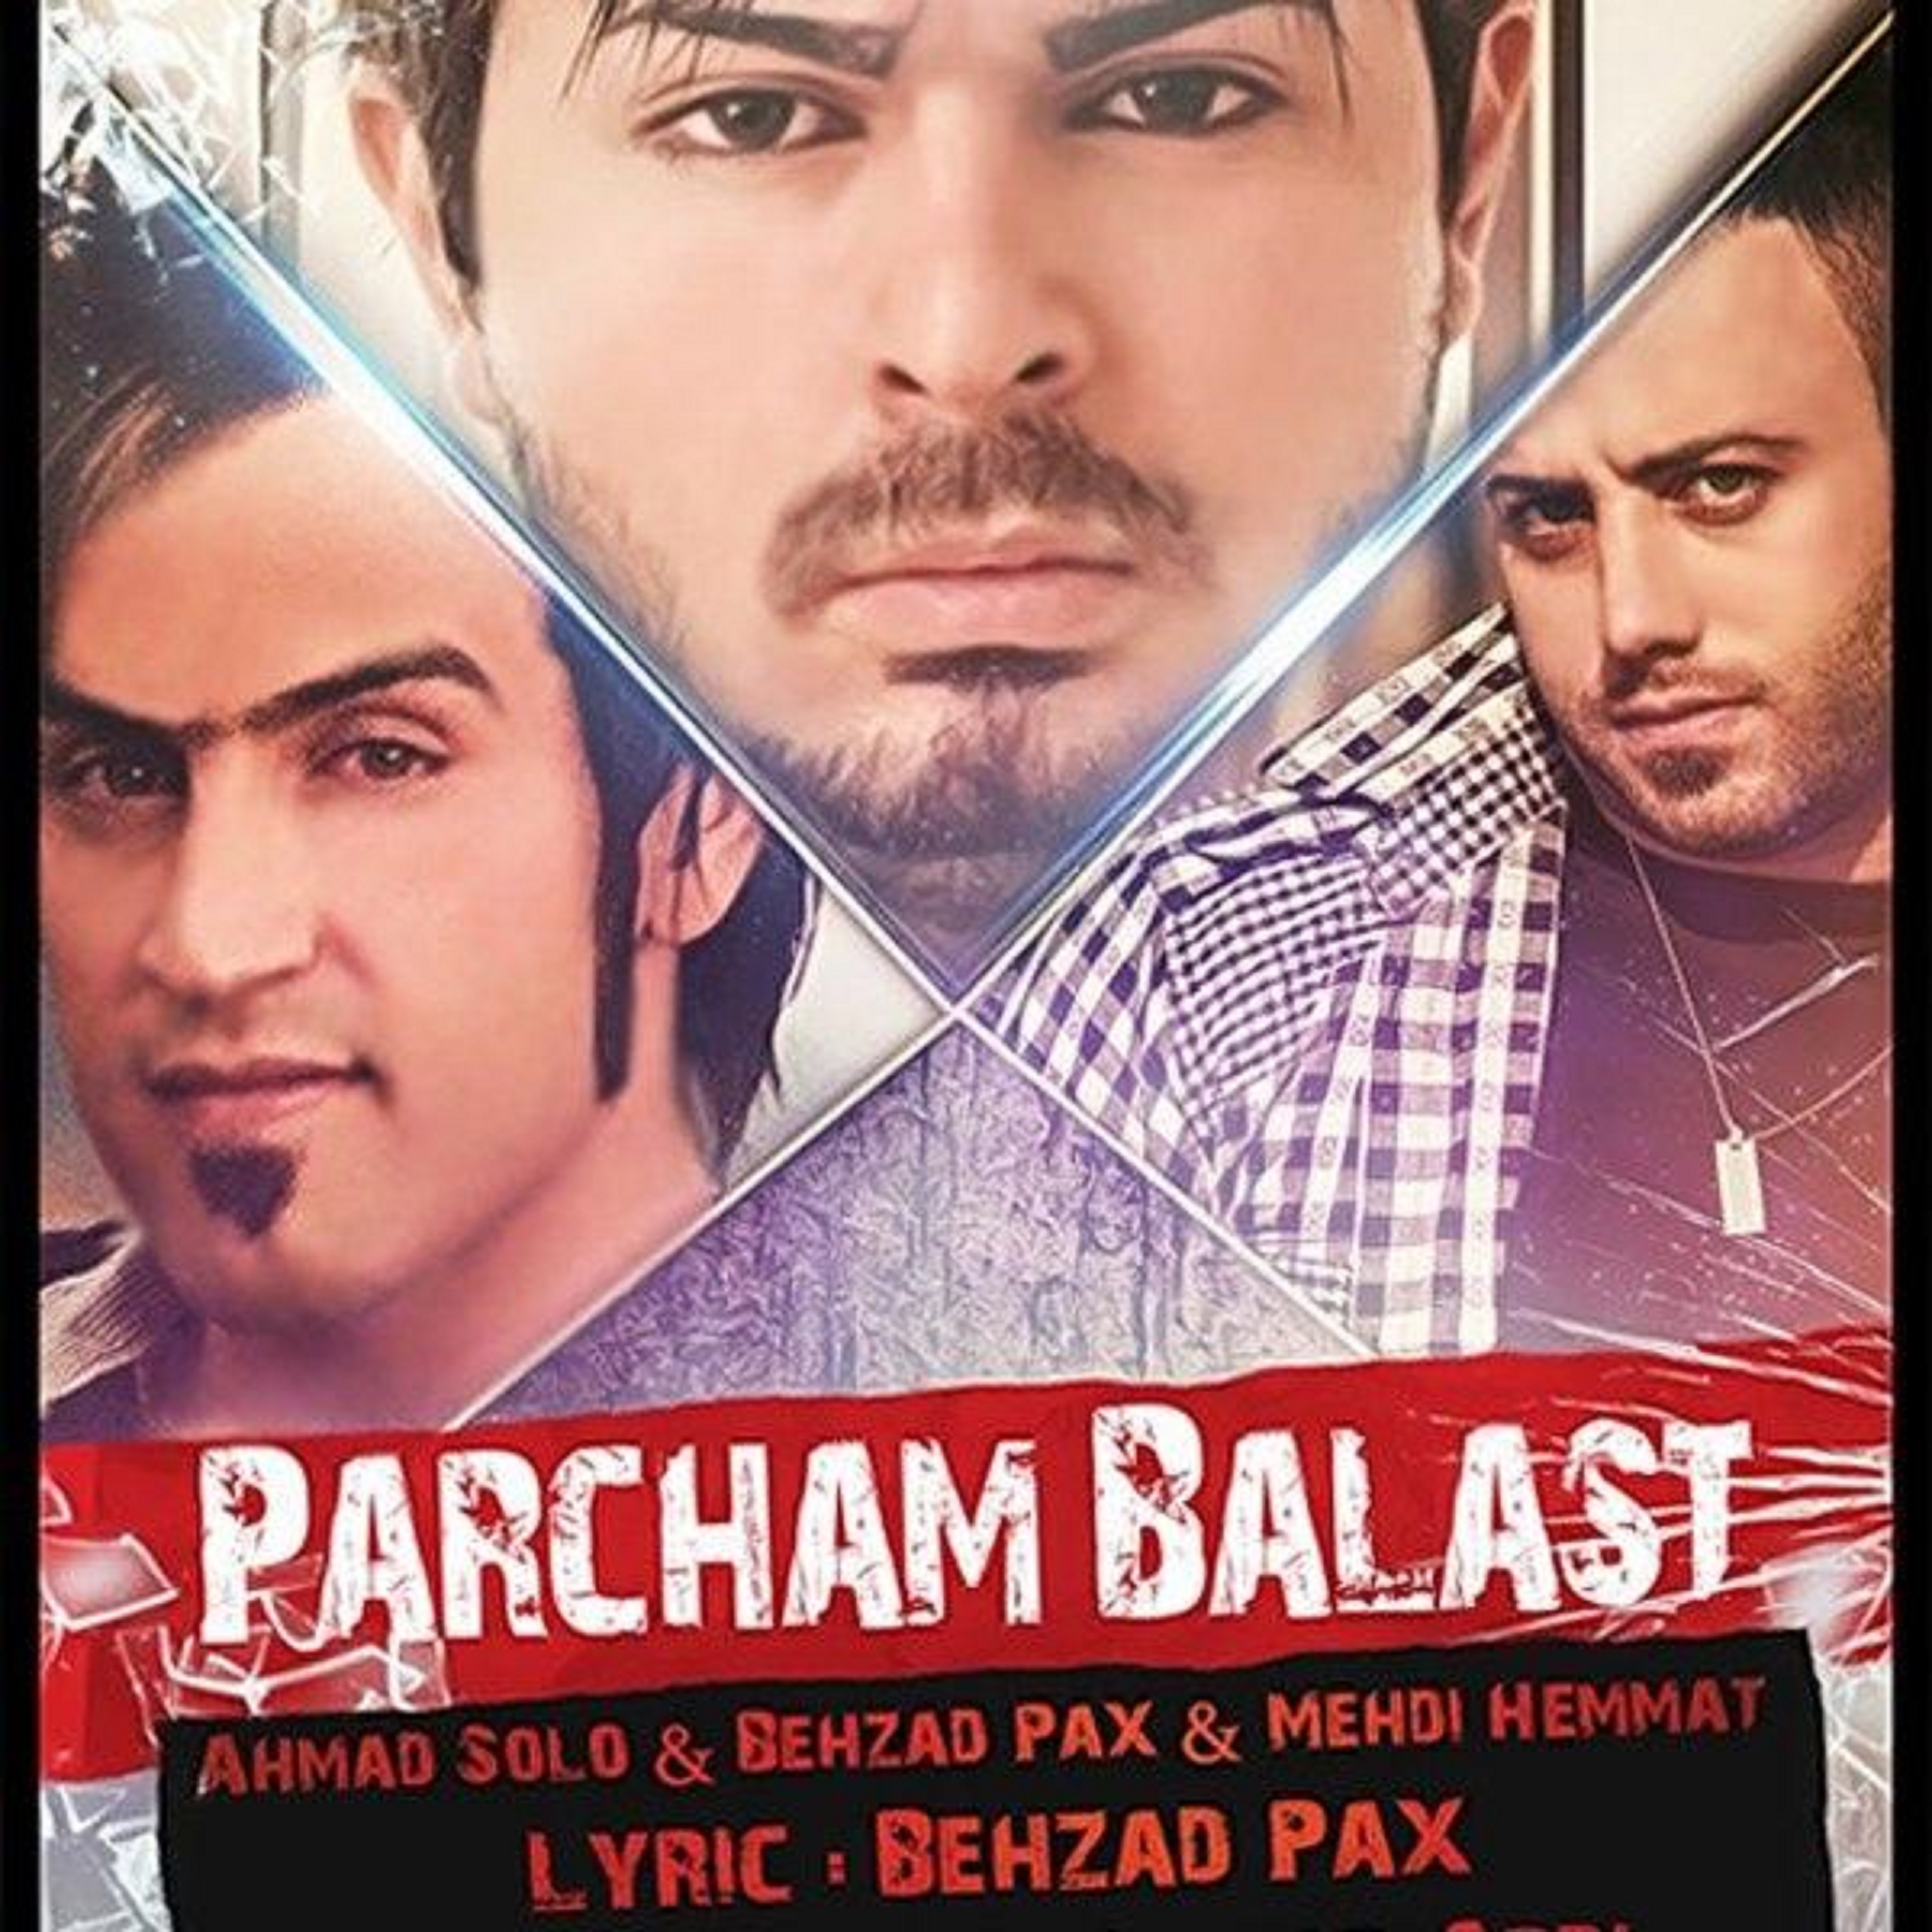  دانلود آهنگ جدید احمد سلو - پرچم بالاست | Download New Music By Ahmad Solo - Parcham Balast (feat. Behzad Pax & Mehdi Hemmat)